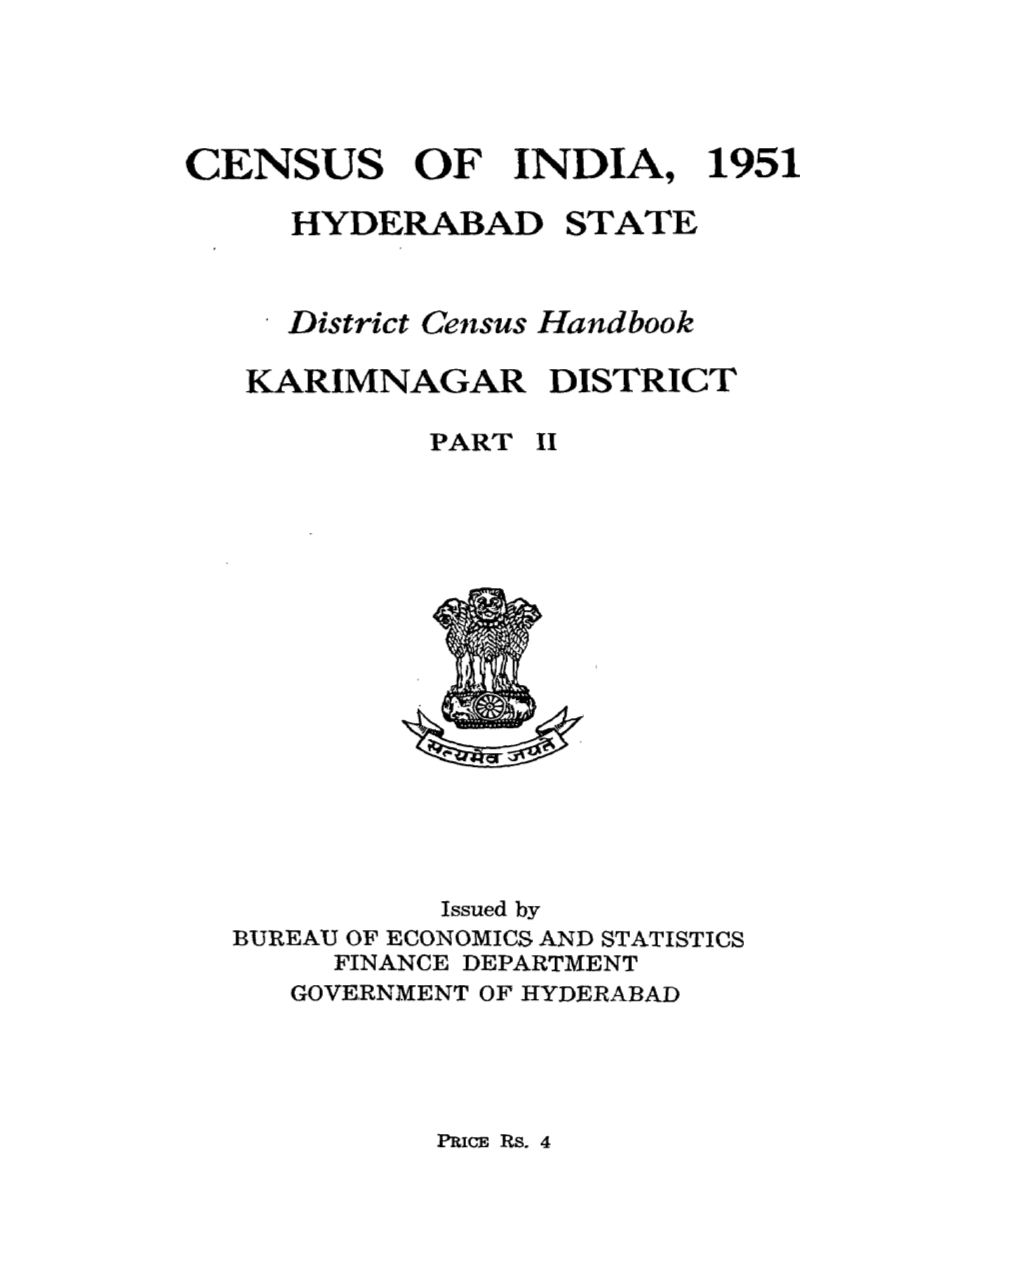 District Census Handbook, Karimnagar, Part II